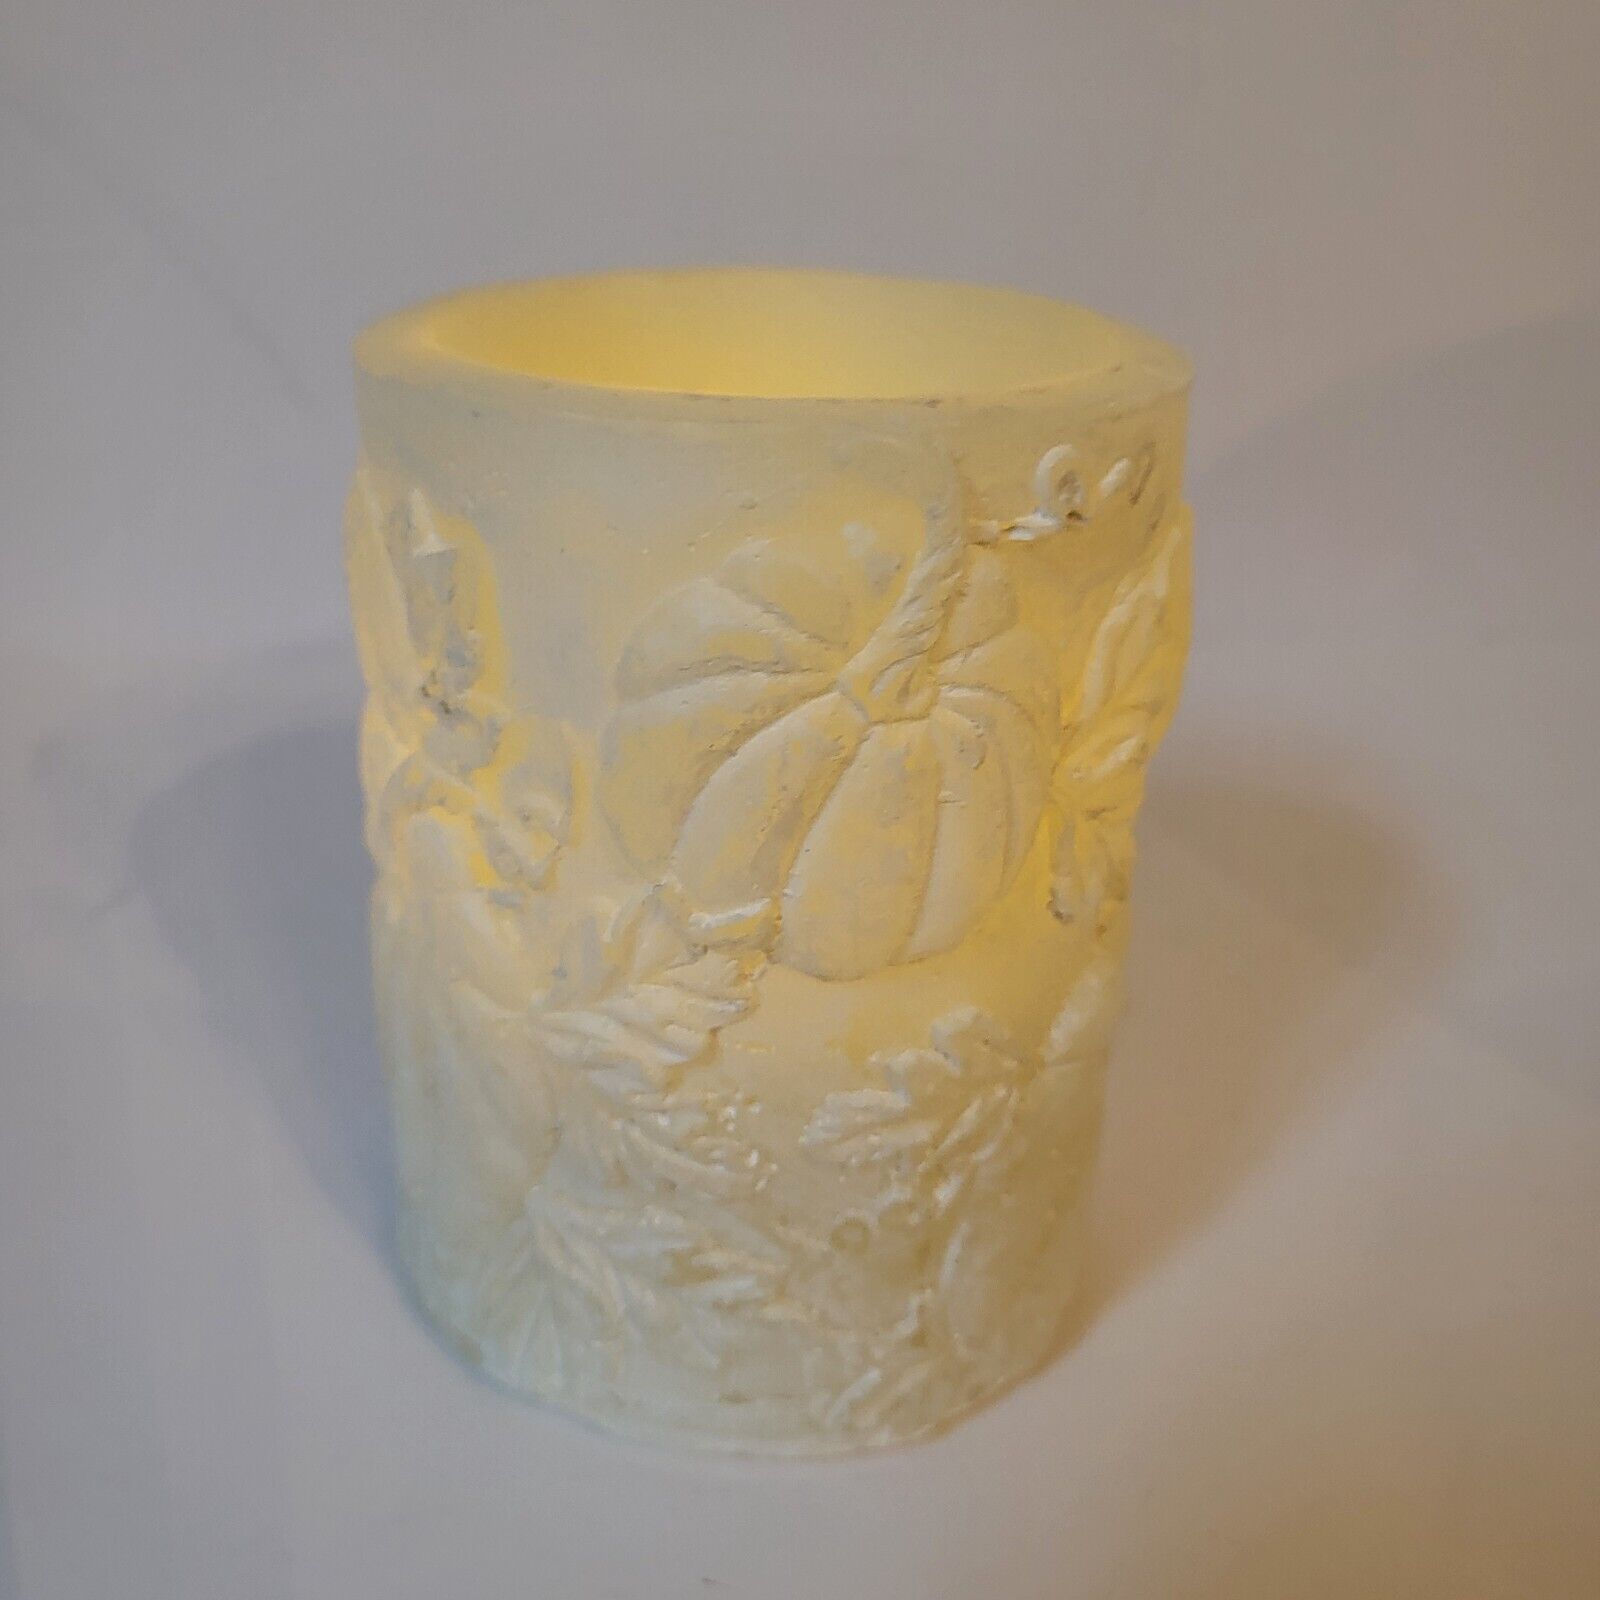 Ashland Flameless Real Wax LED Pillar Candle Cream Ivory Color PUMPKINS 4" - $7.69